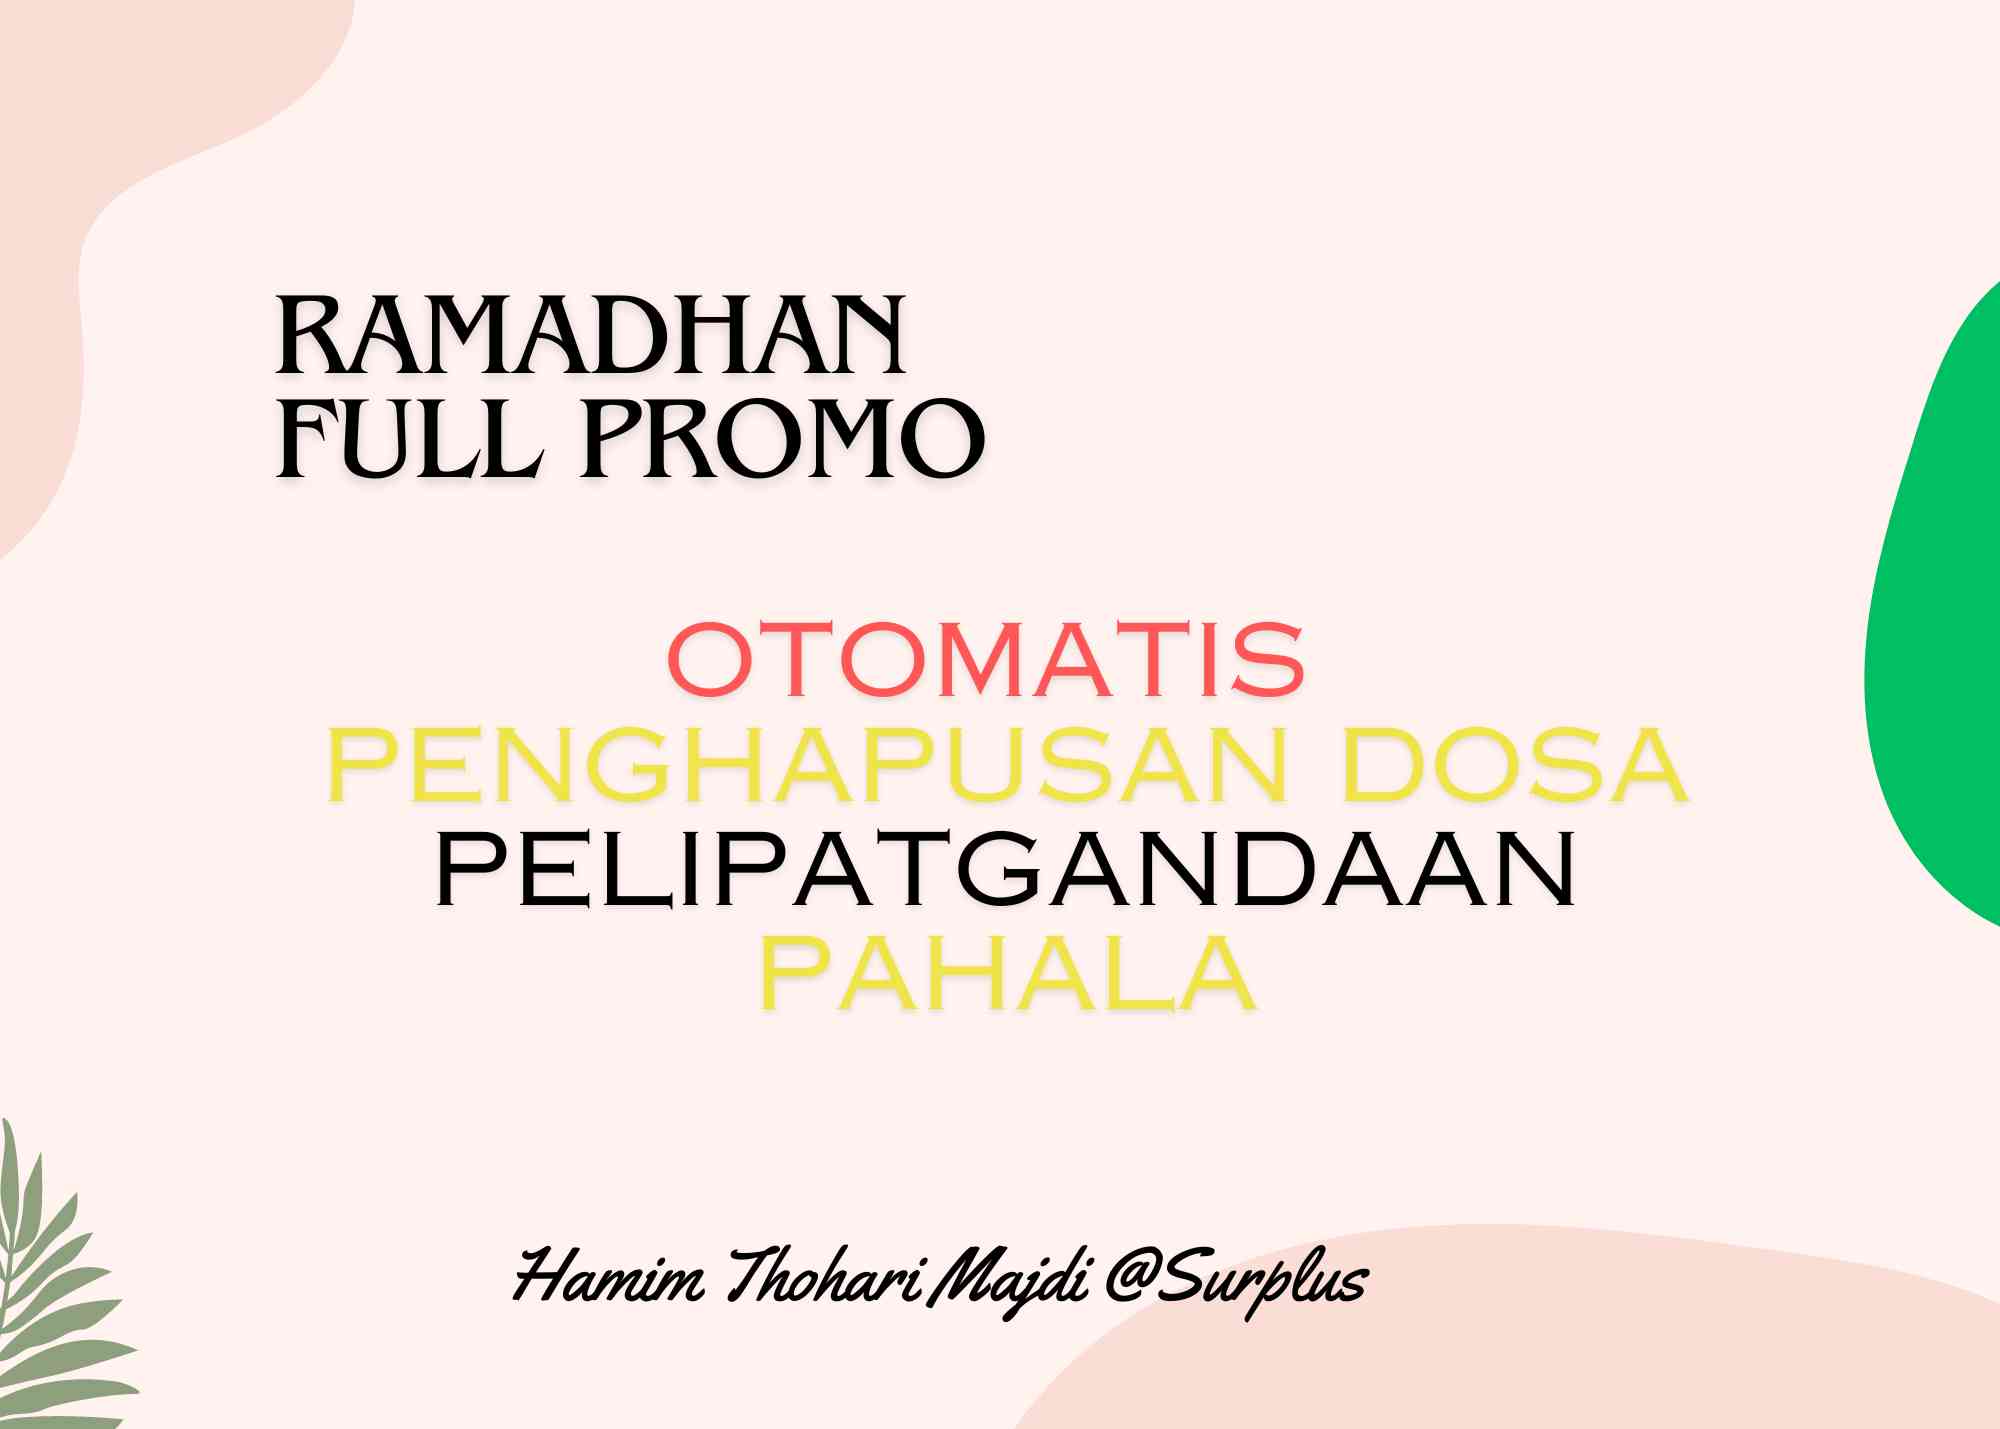 Full Promo Di Bulan Ramadhan (Hamim Thohari Majdi)